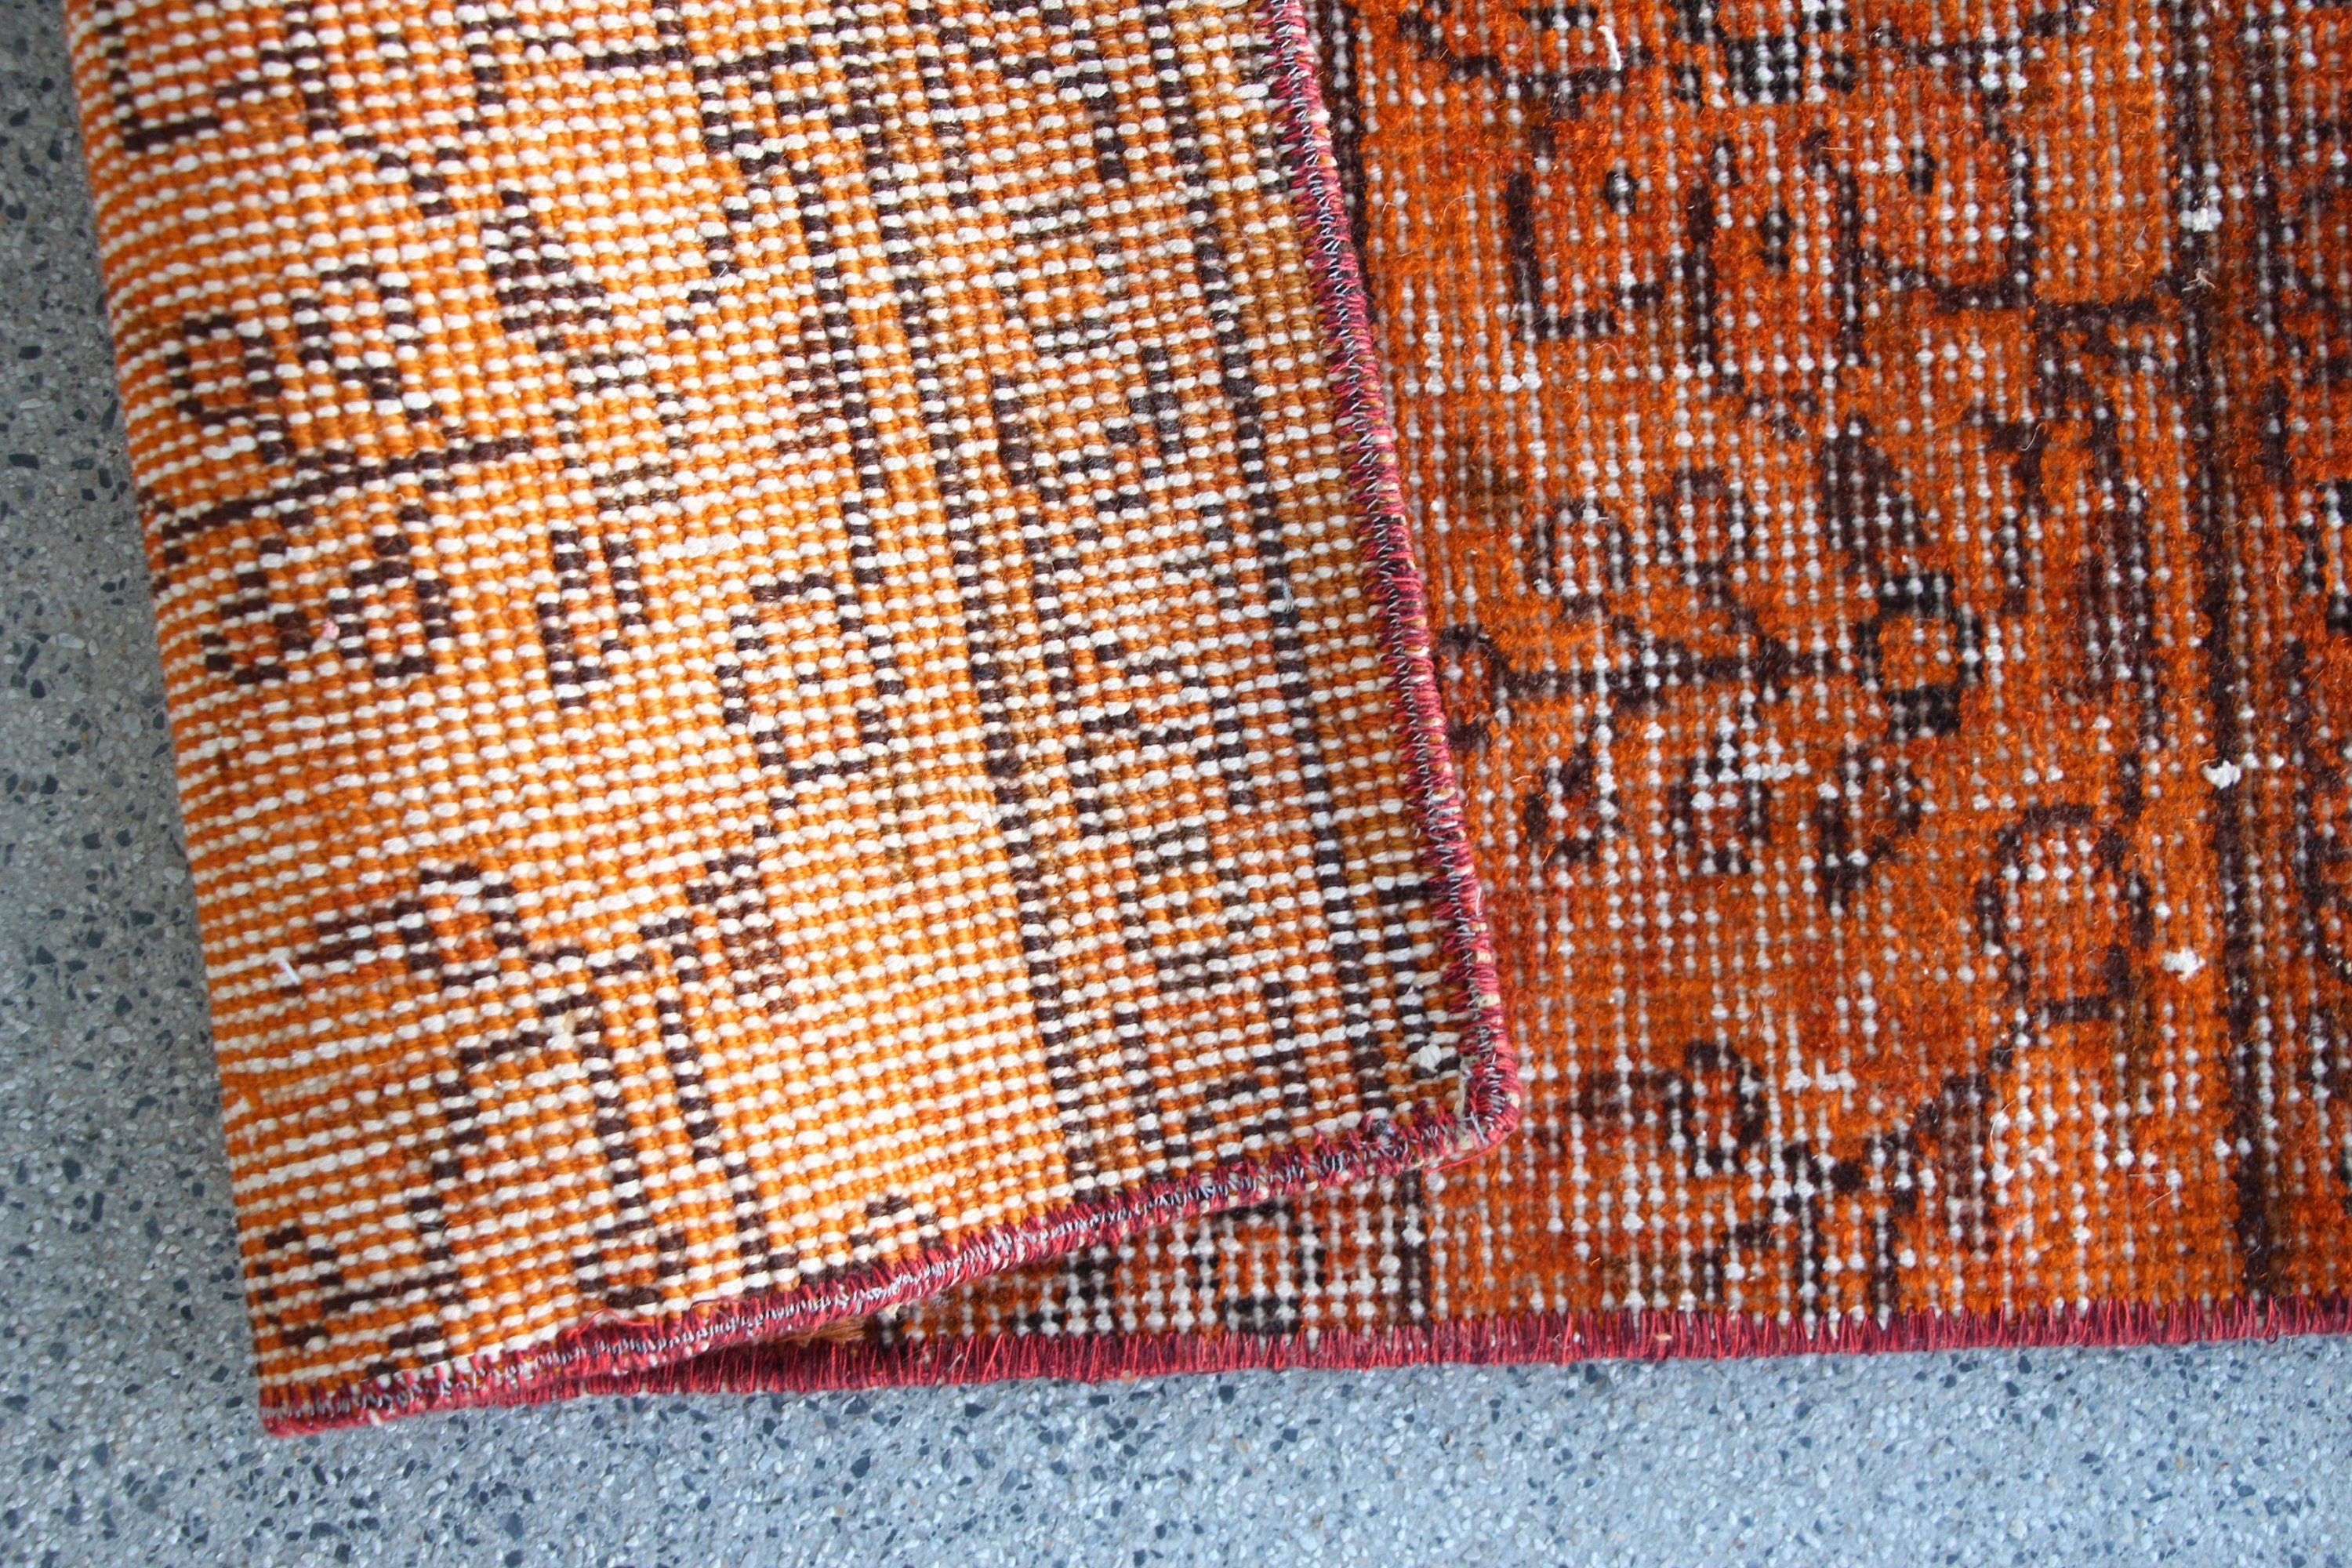 Bath Rugs, Kitchen Rug, Vintage Rugs, Distressed Rug, 2.1x3.9 ft Small Rug, Turkish Rugs, Orange Antique Rugs, Home Decor Rug, Wool Rugs